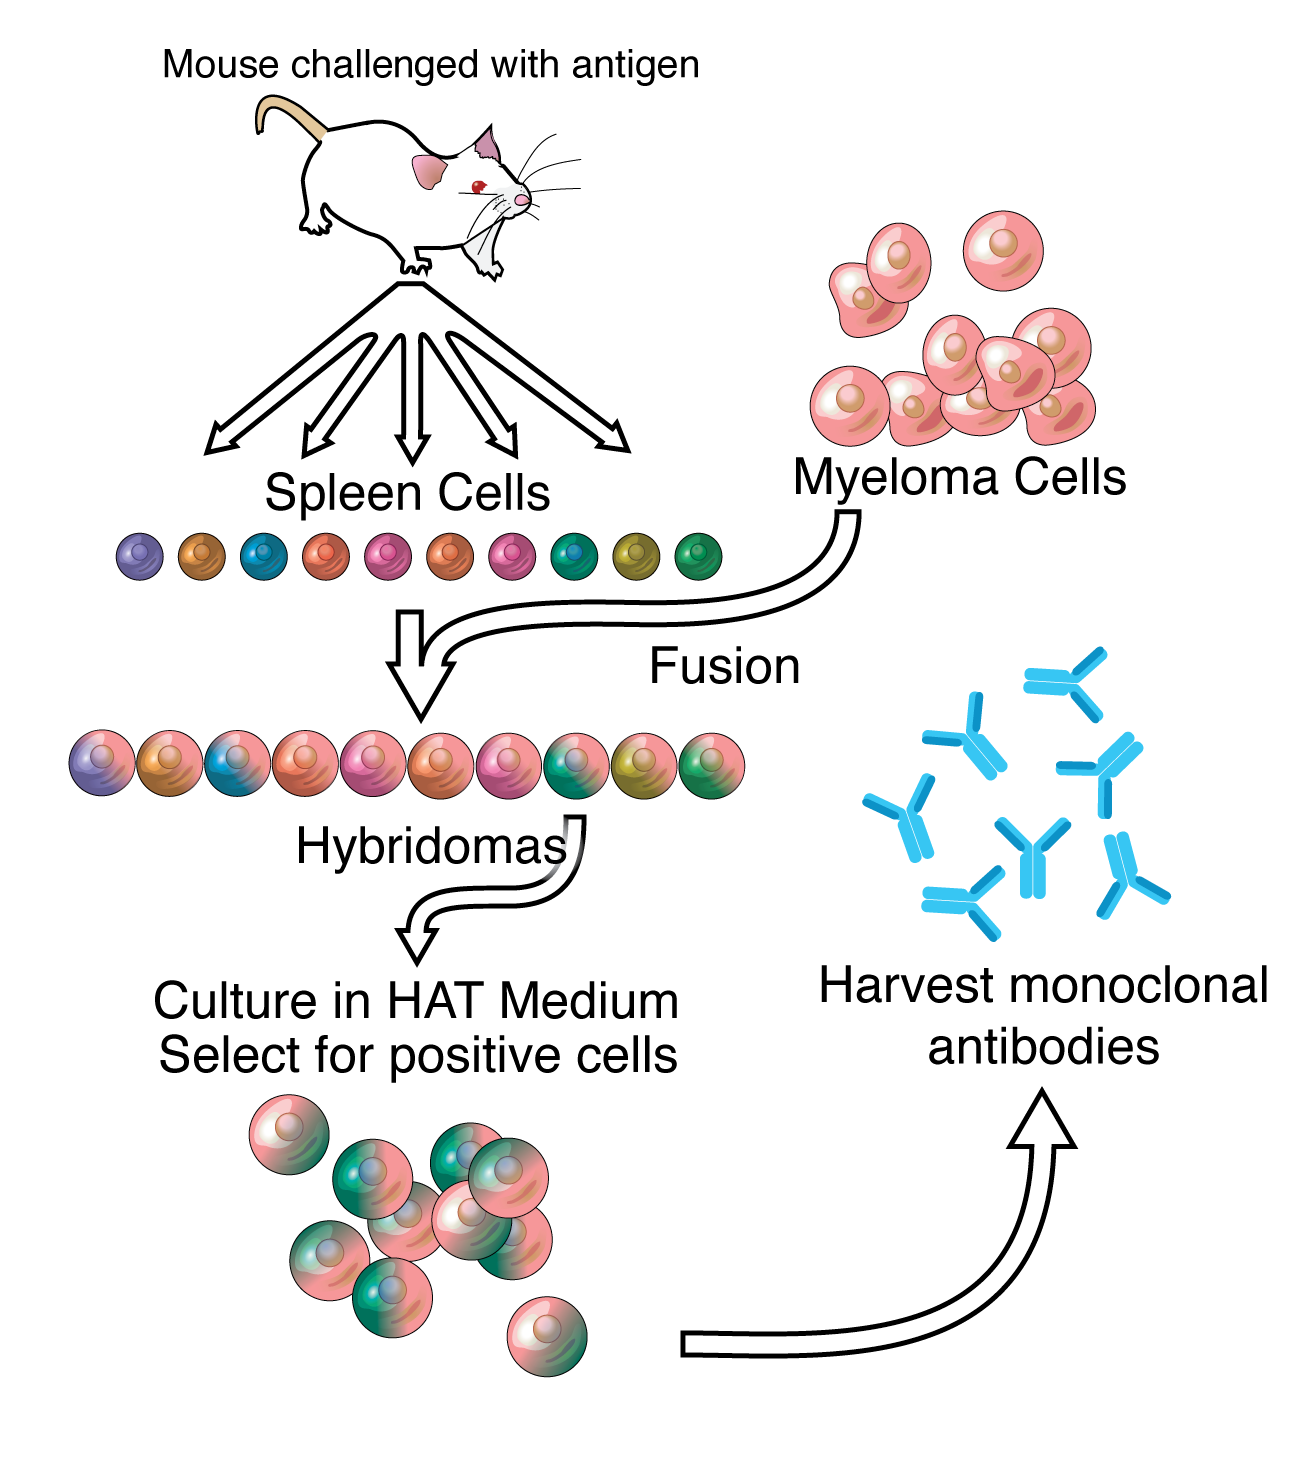 monoclonal antibody production flow